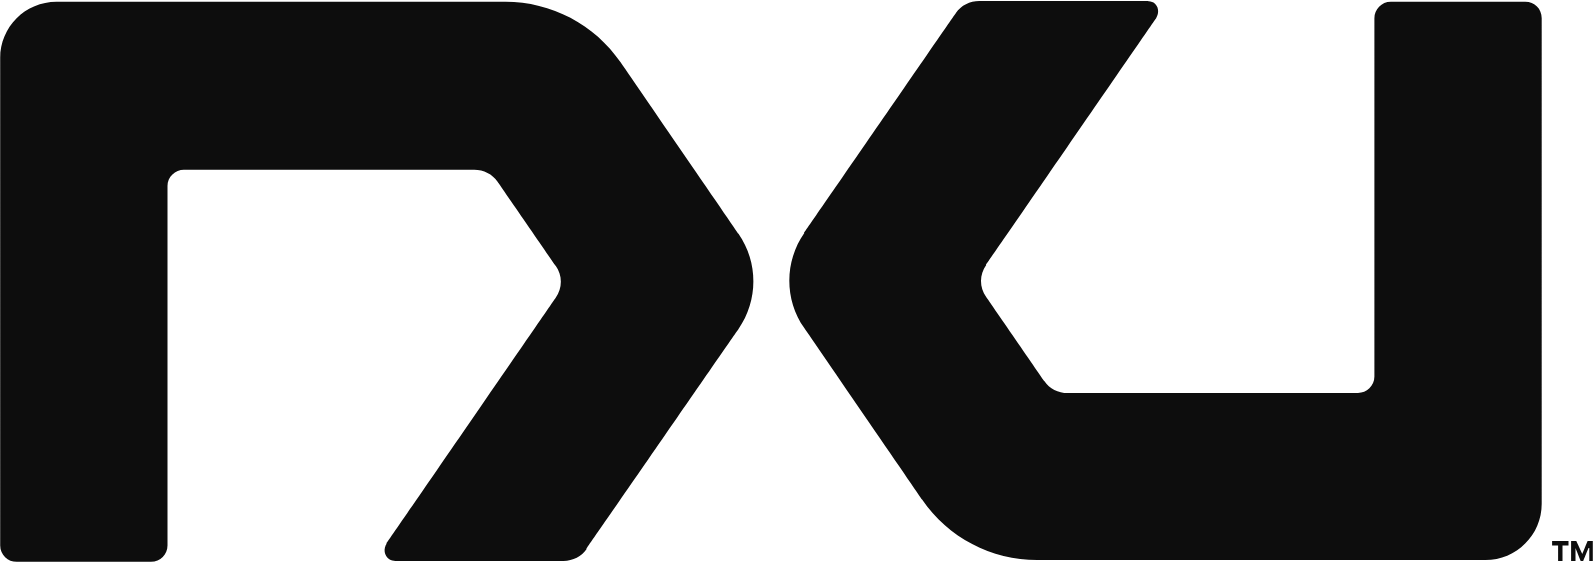 Nxu logo large (transparent PNG)